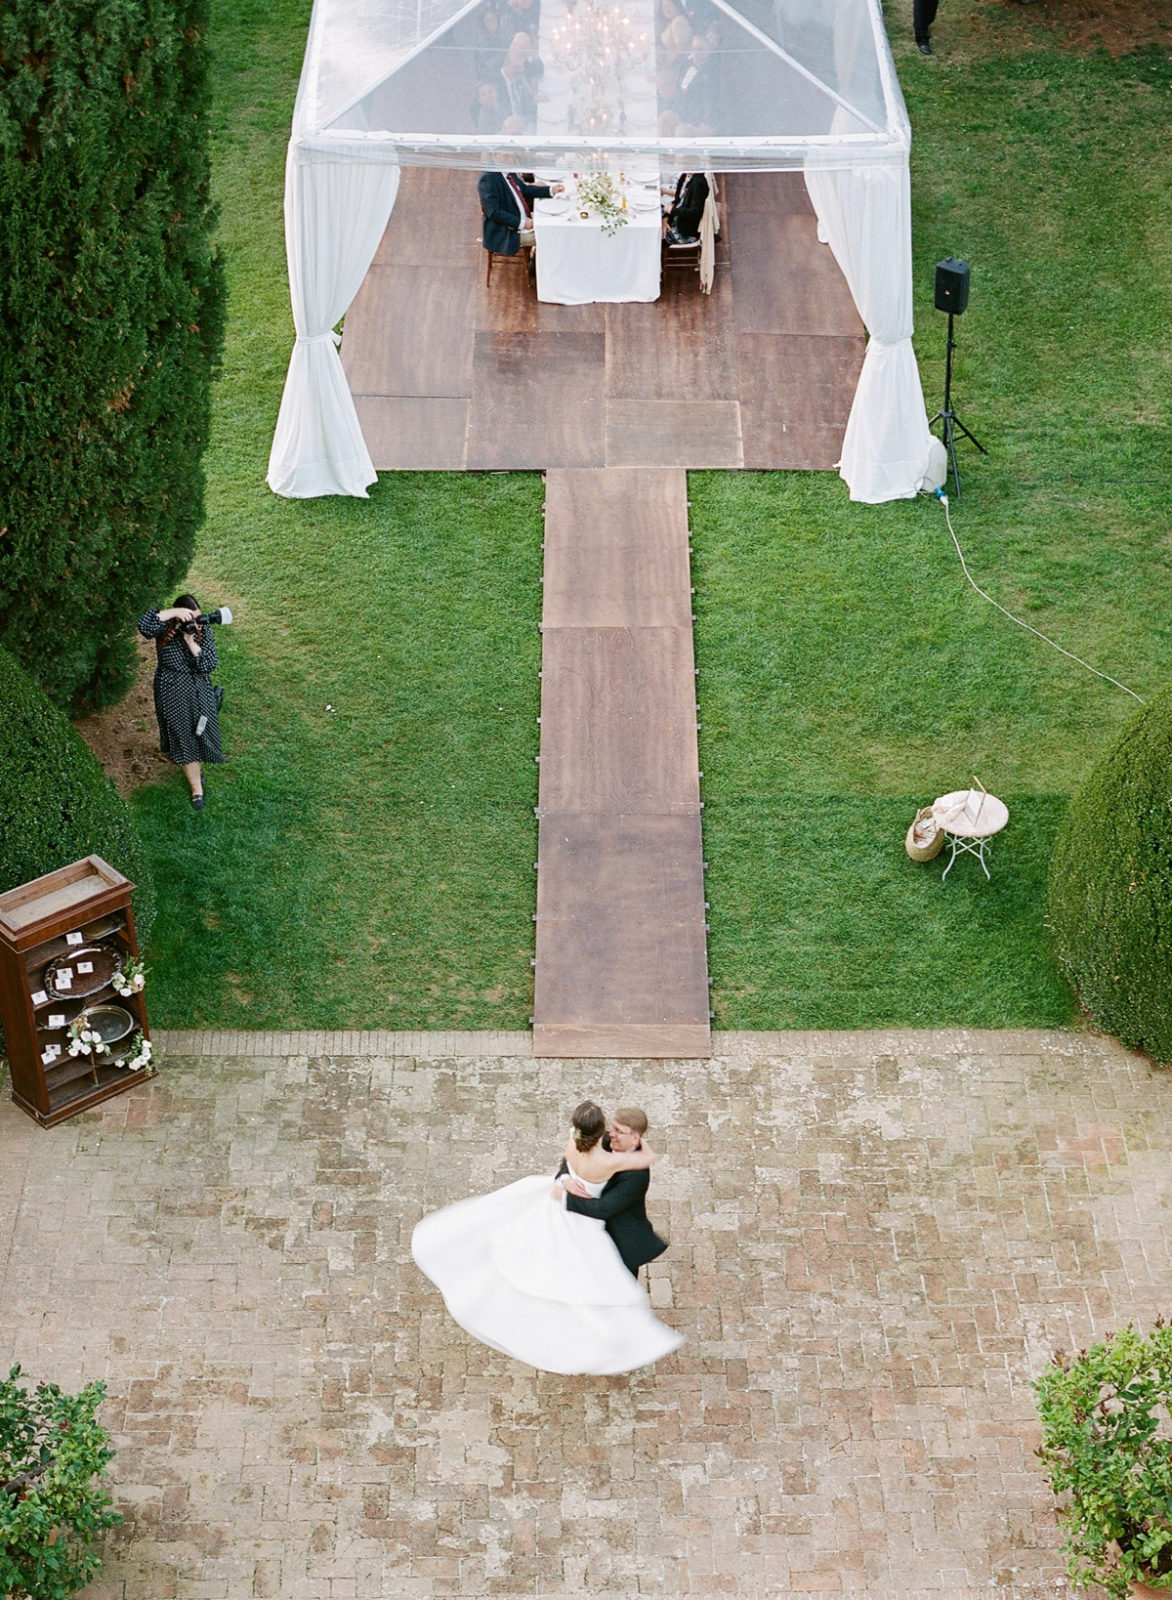 Villa Cetinale Wedding Photographer | Siena Wedding Venue | Tuscany Film Photographer | Italy Destination Wedding | Molly Carr Photography | First Dance